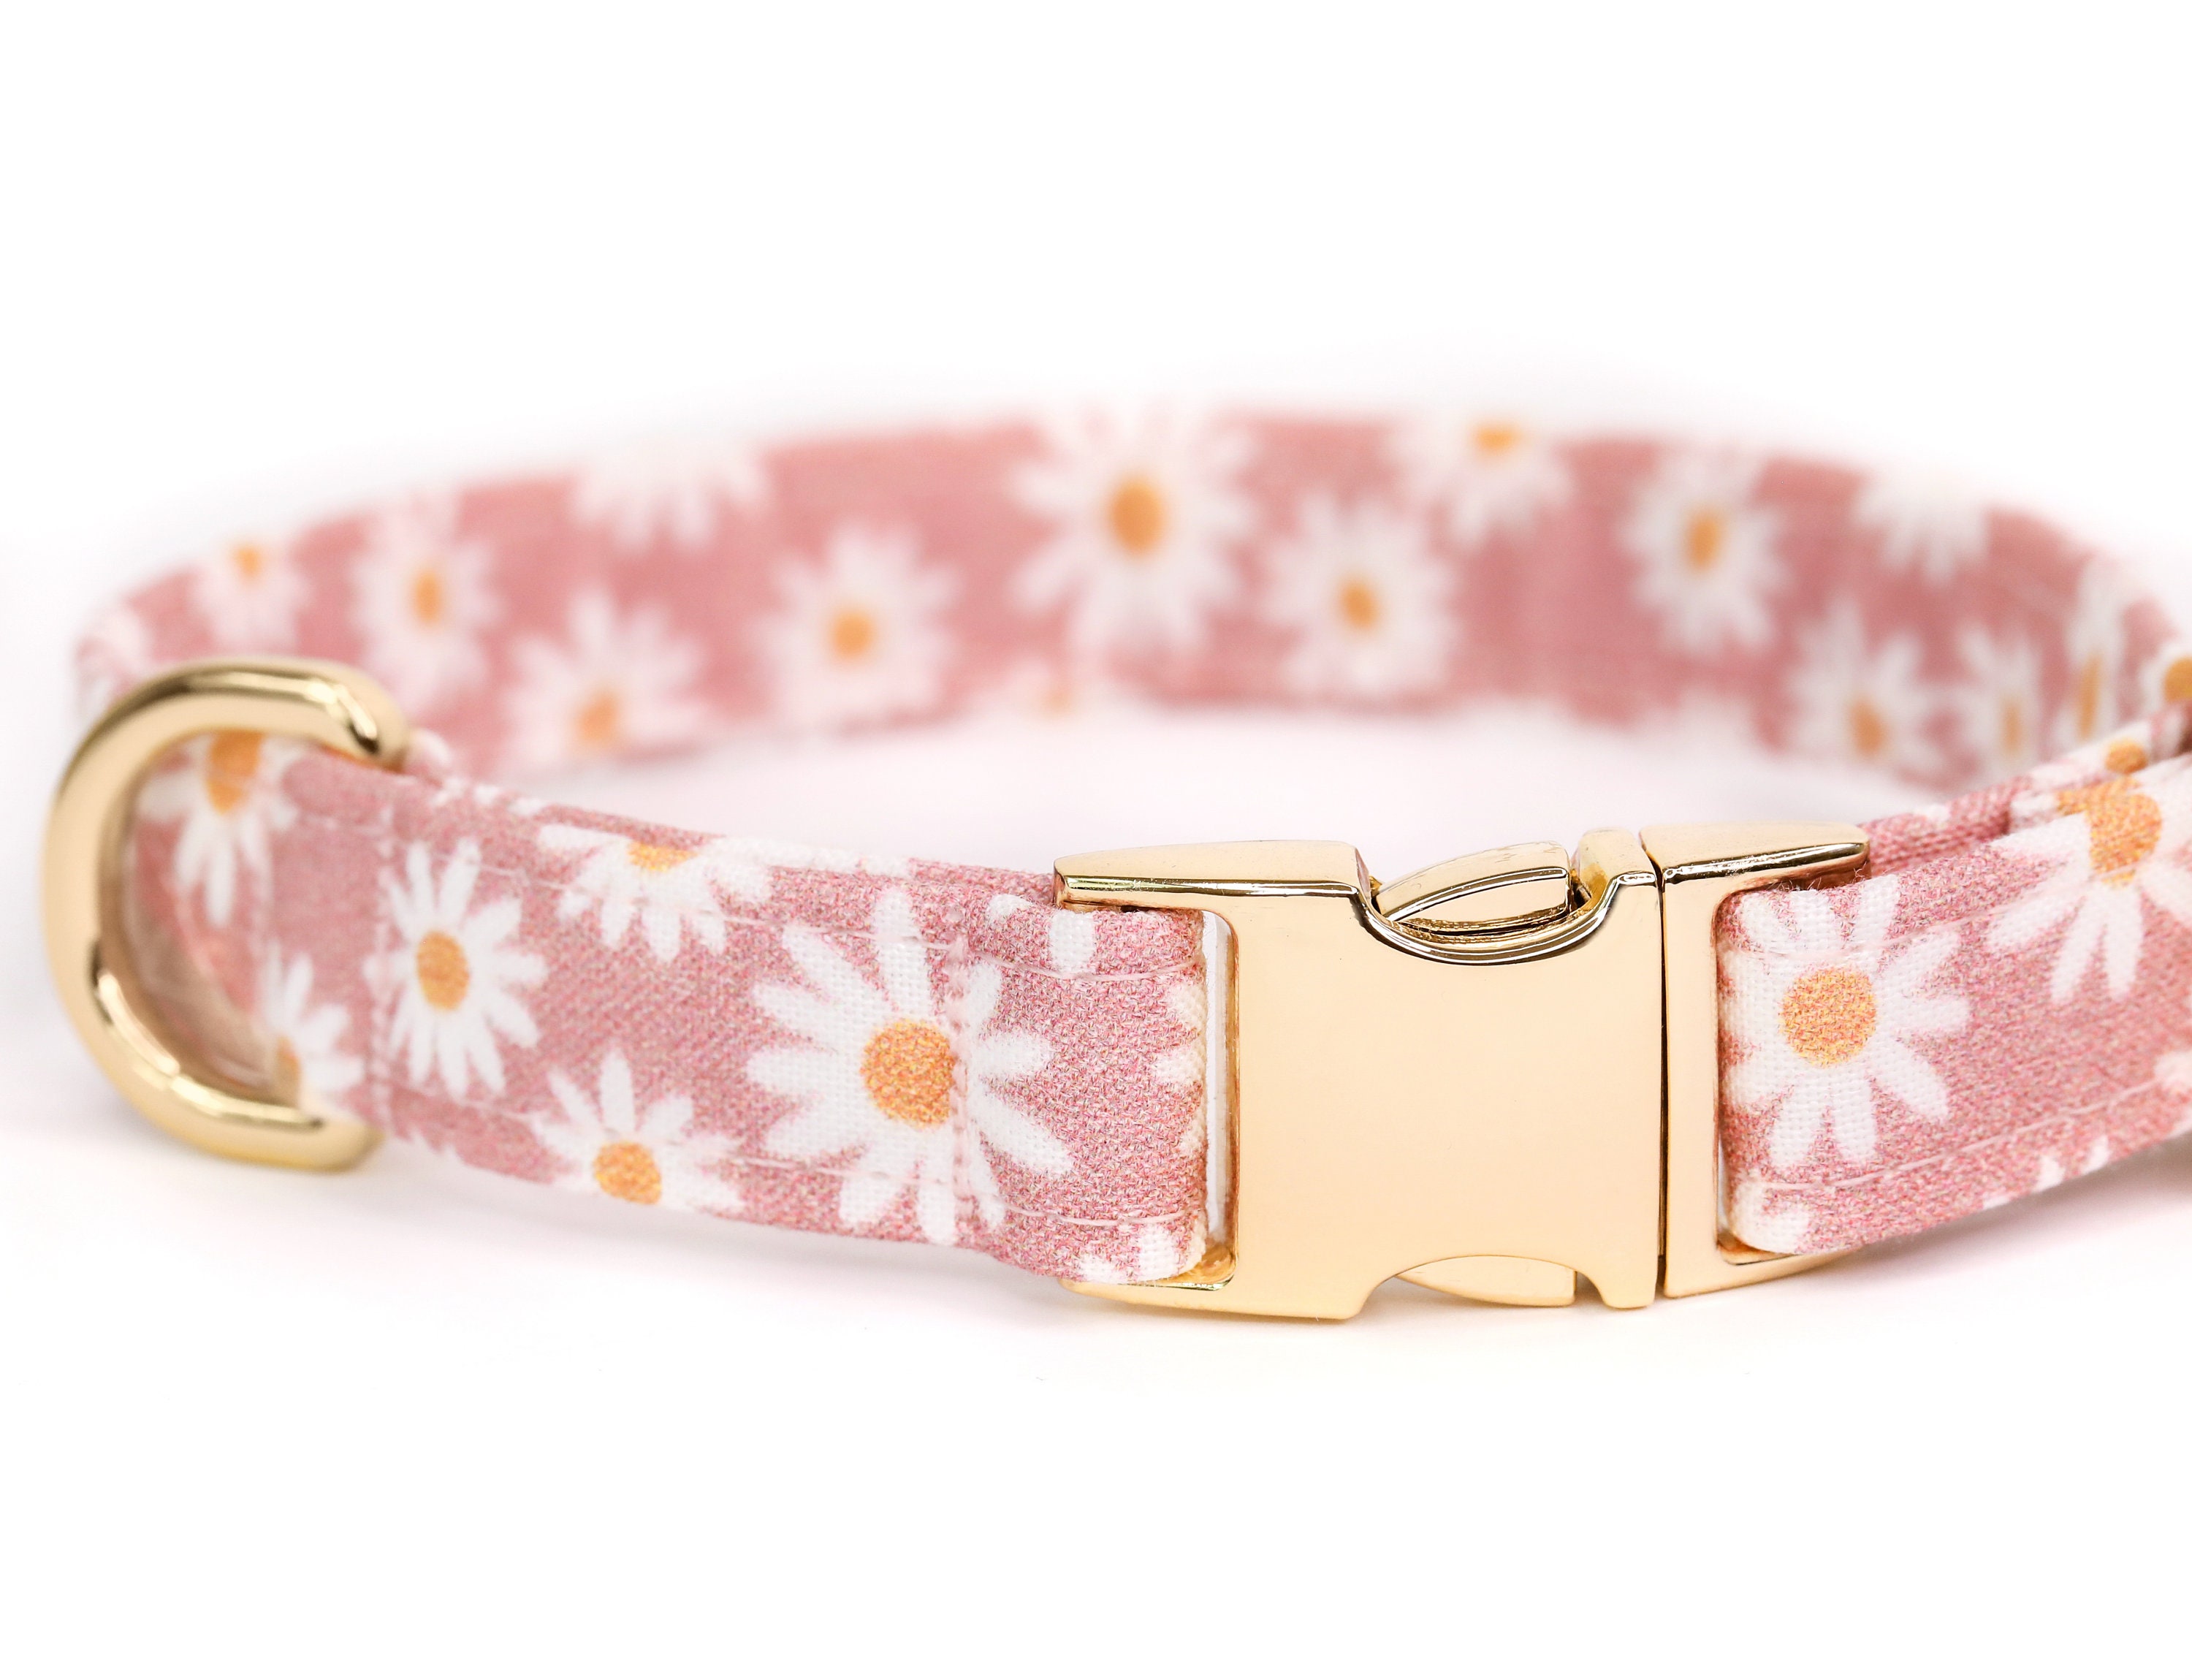 Customized Dog Collar, Adjustable Small Medium Large, Cute Girl Female  Summer Spring Pretty Designer Puppy, Floral White Daisy